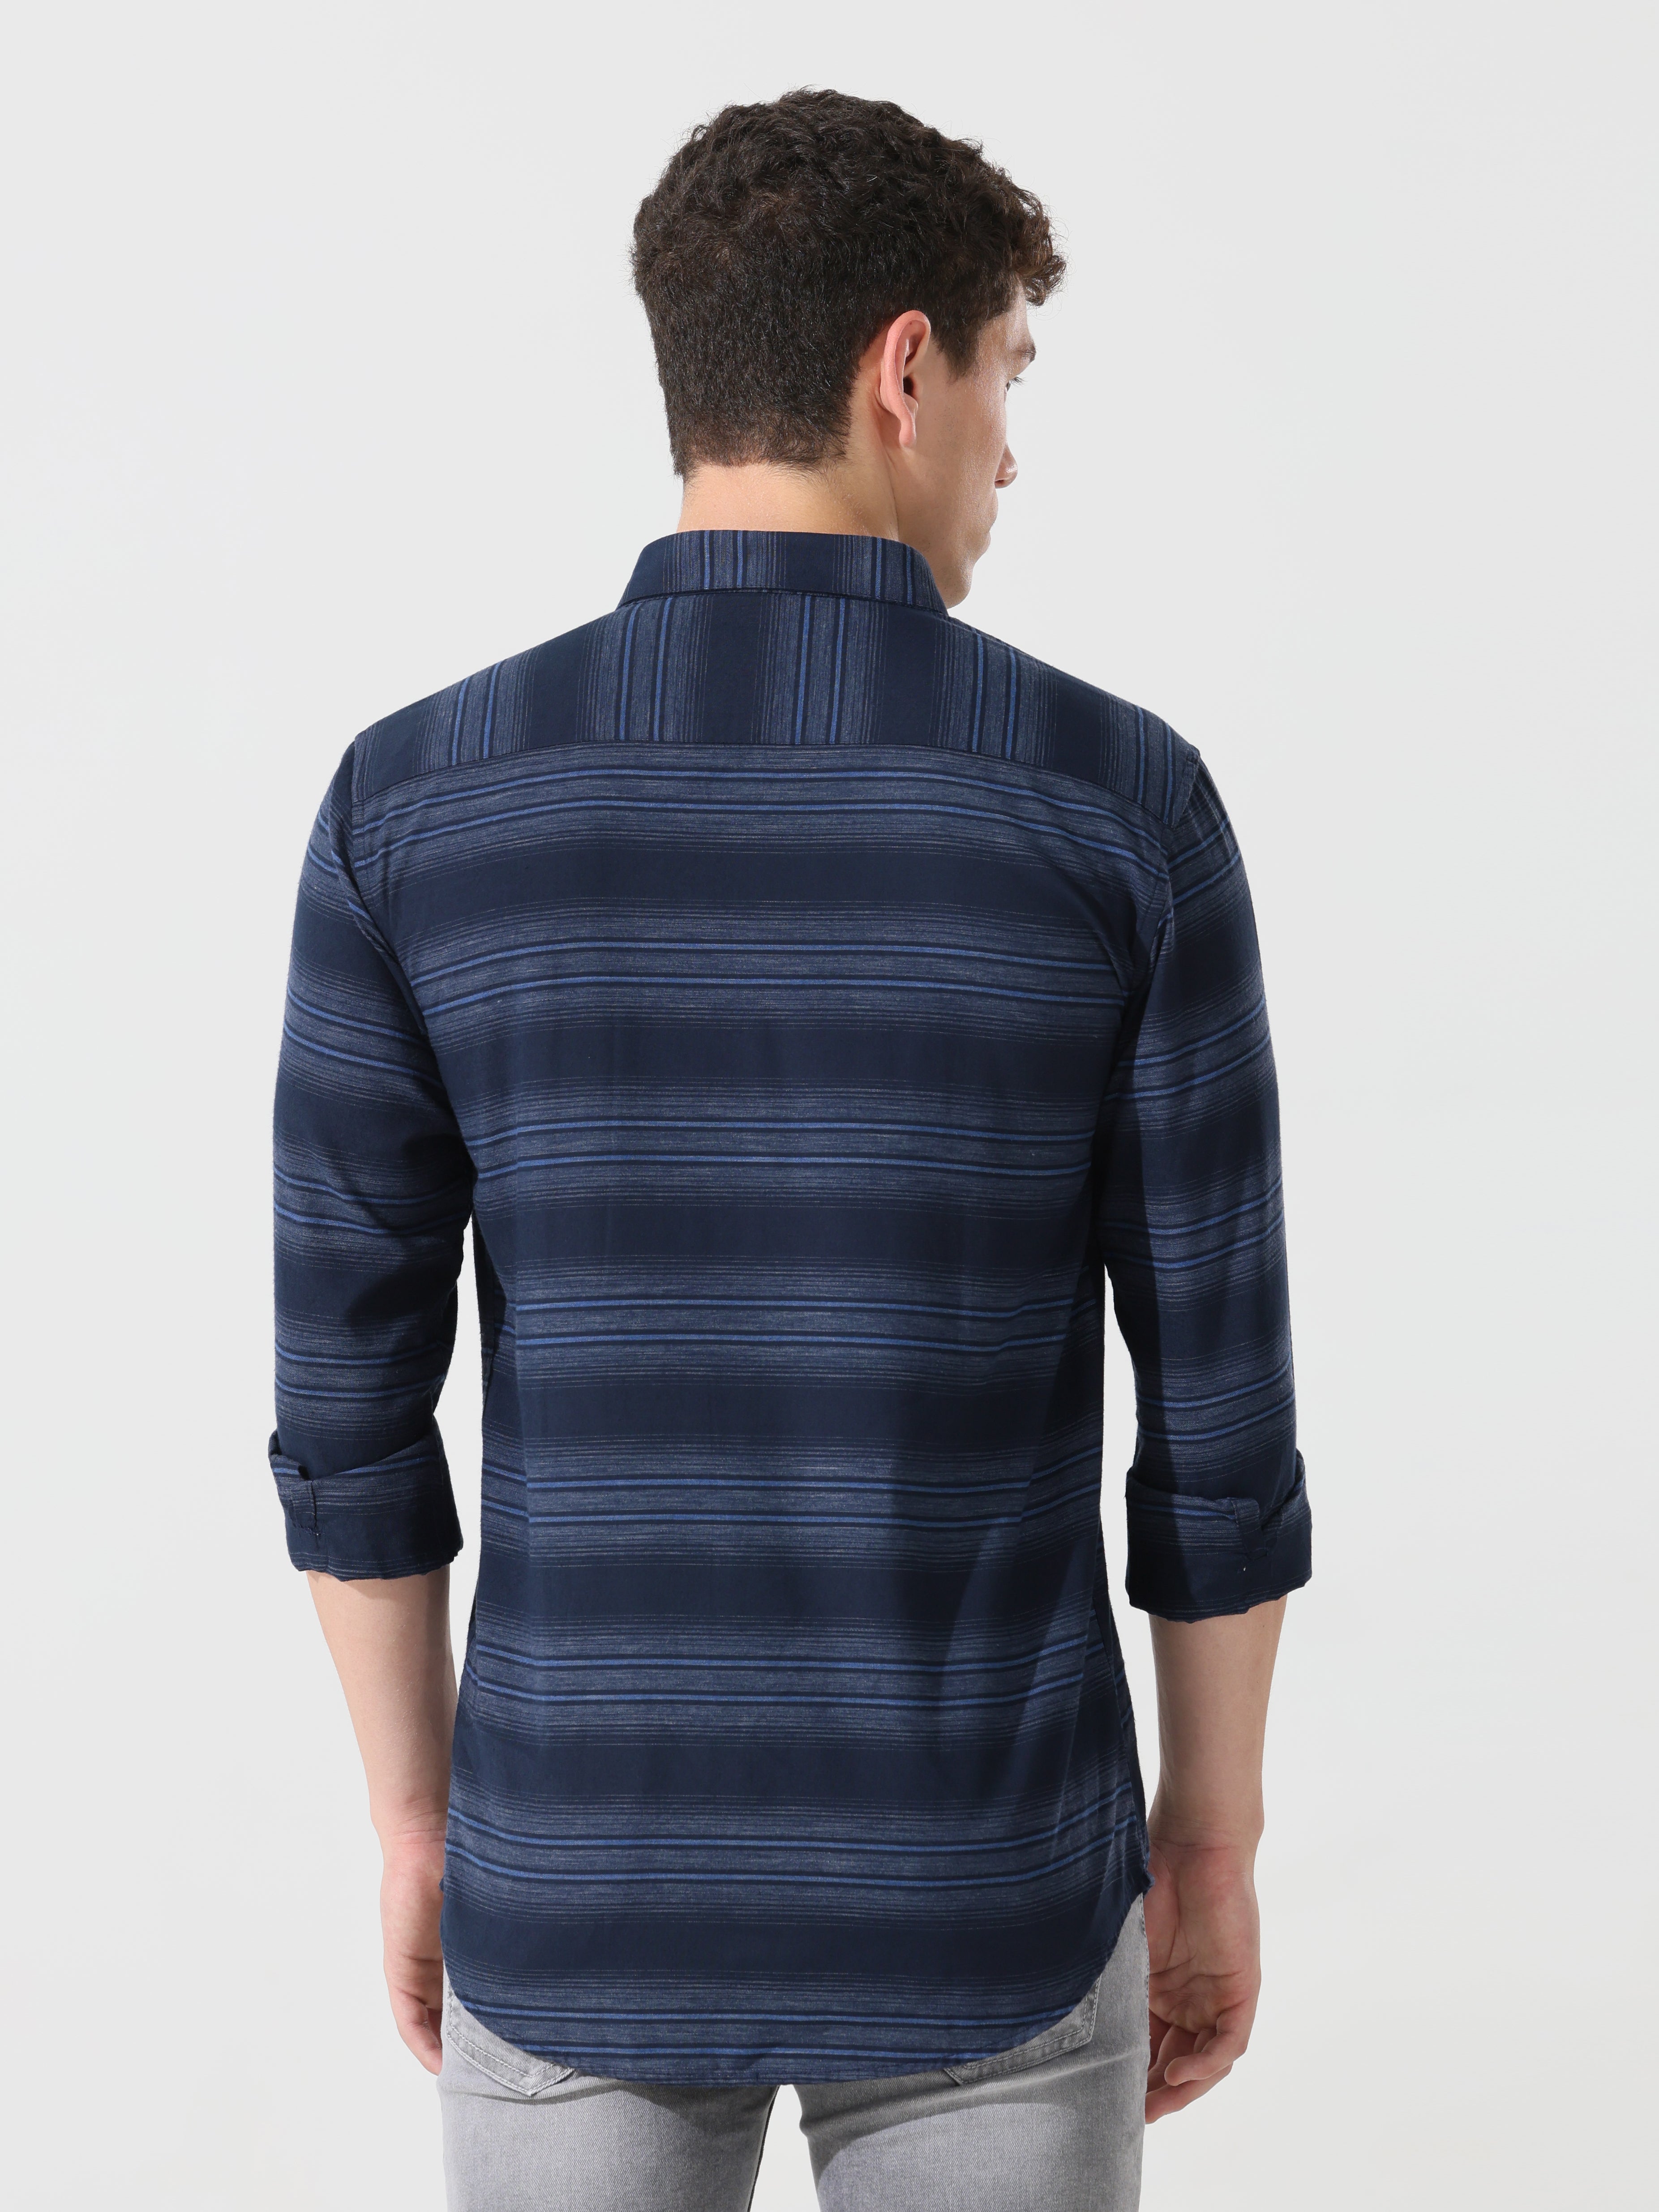 Navy blue stripe slim fit shirts - Address pro